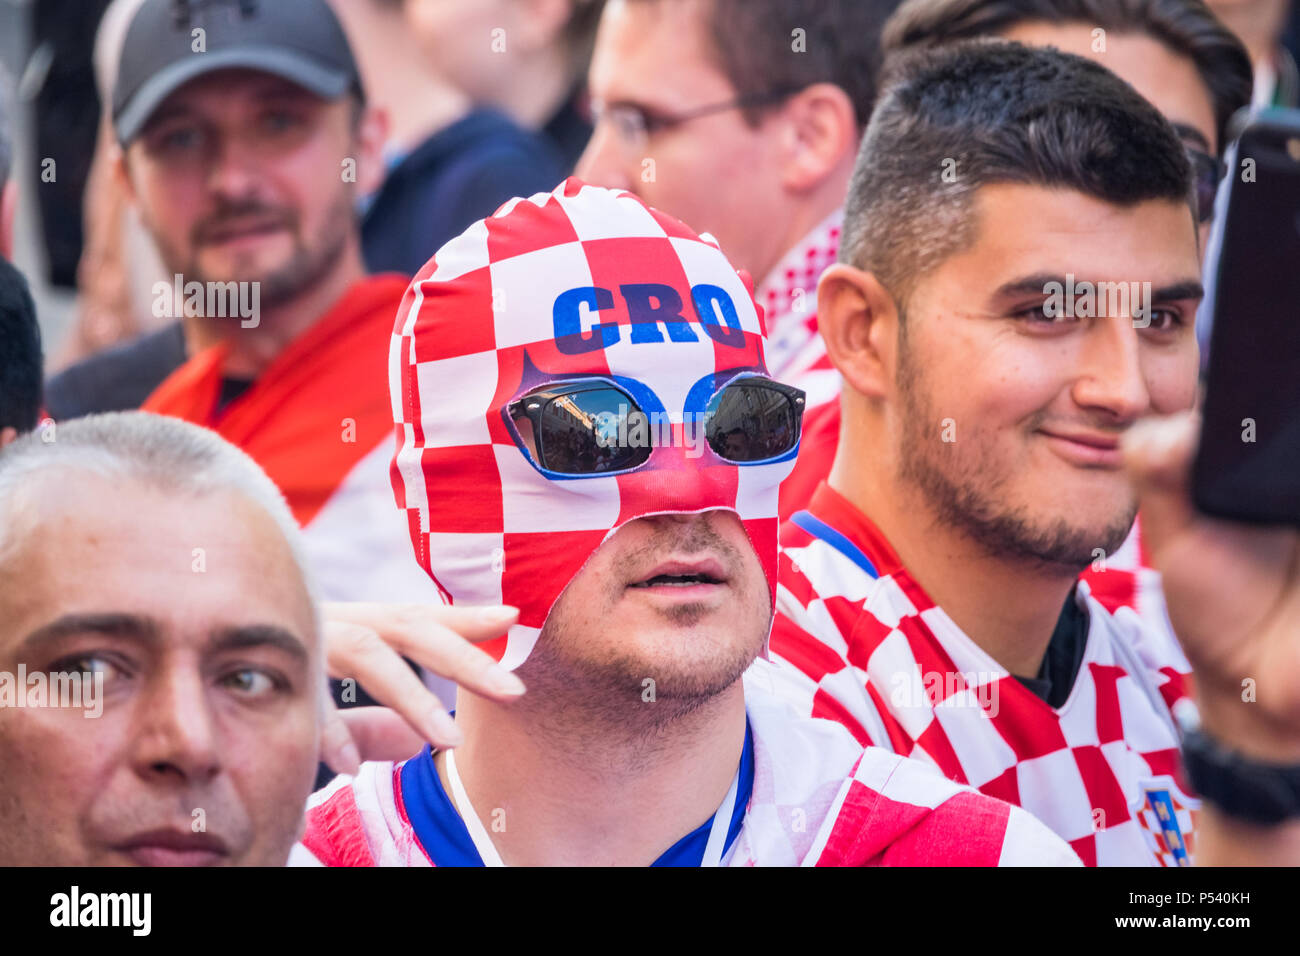 Kroatische männer